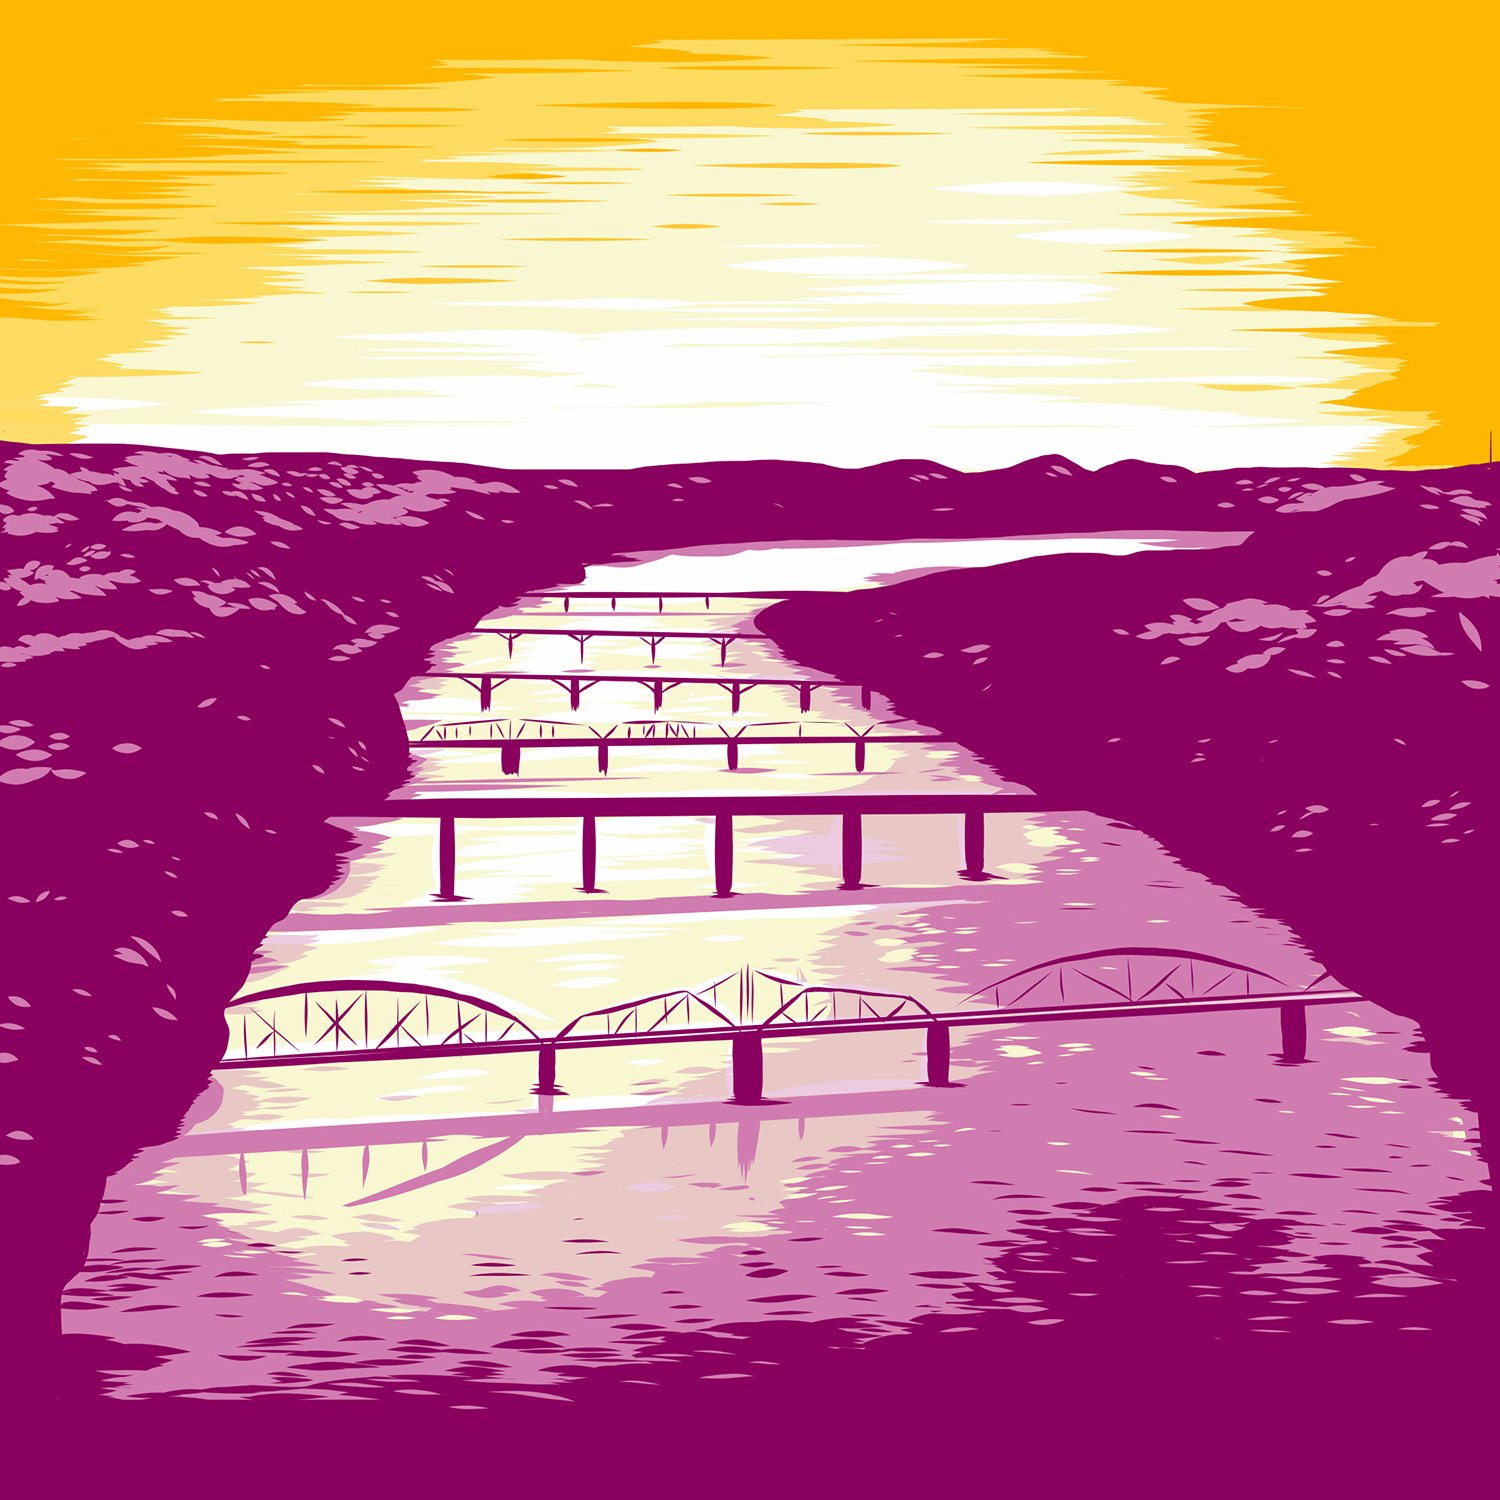    Six Bridges Book Festival 2020  , digital illustration, 5” x 5” 